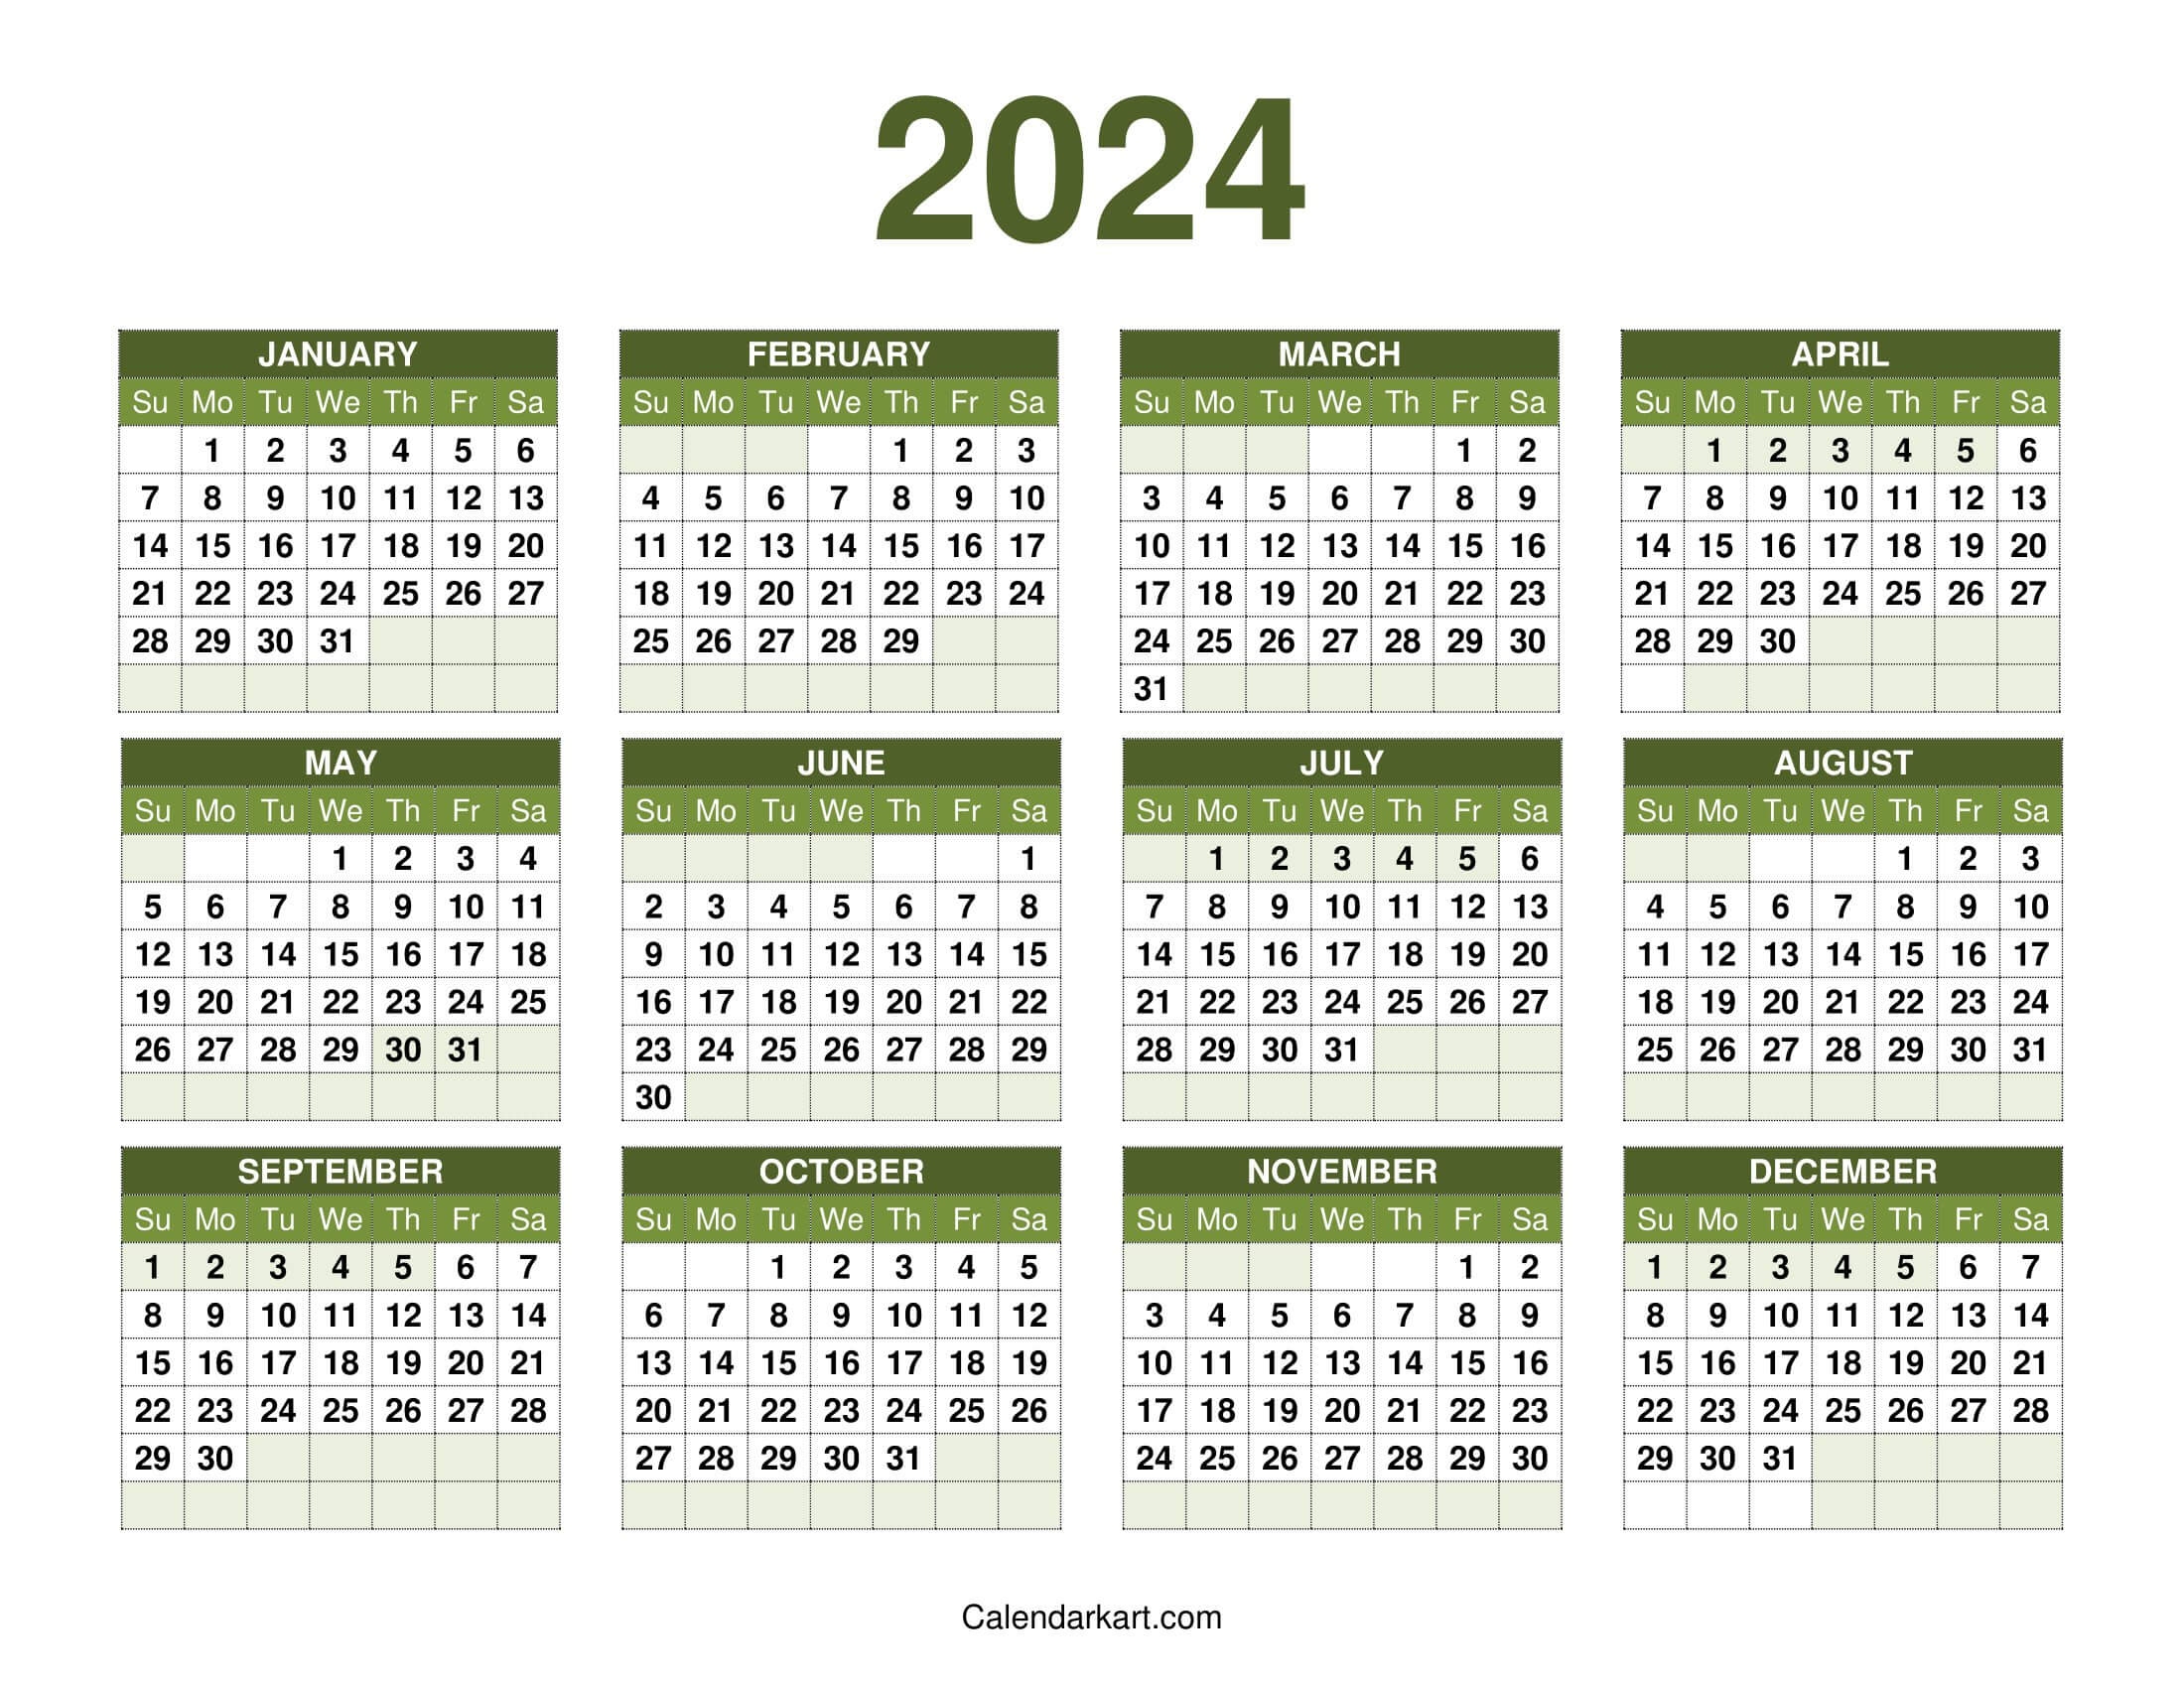 Download Printable Year At Glance Calendar 2024 | Calendarkart for Free Printable Calendar 2024 Year At A Glance